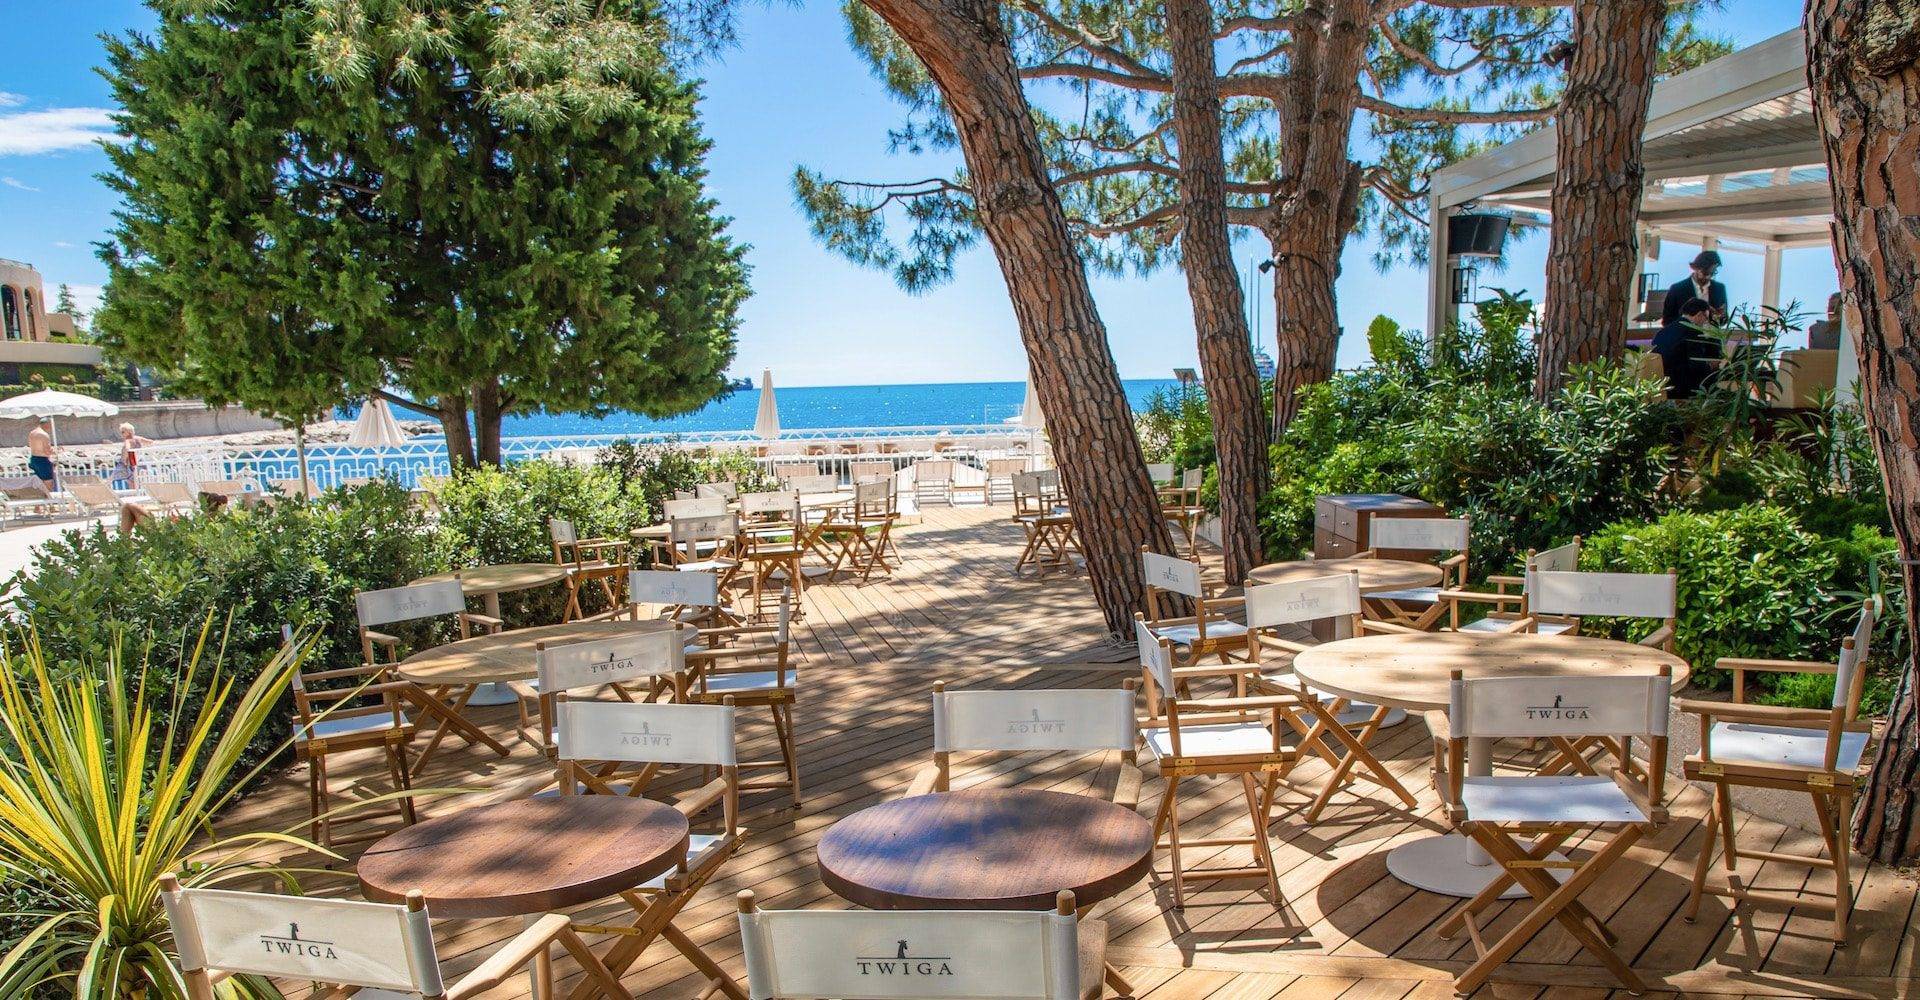 Ilios Restaurant A C C E S S Monaco